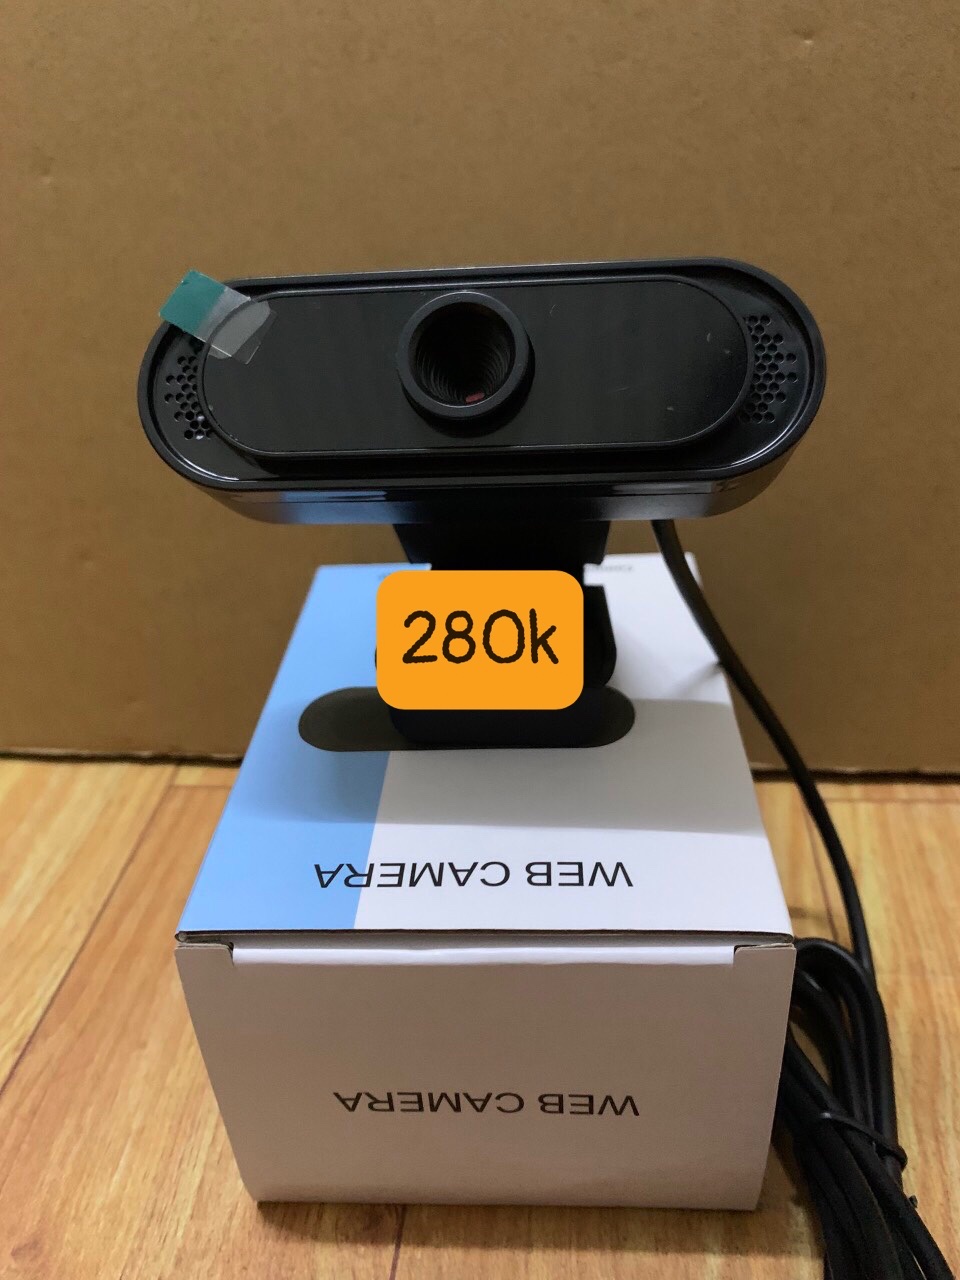 Webcam Autofocus Cam For PC Laptop Desktop with Microphone Camera New